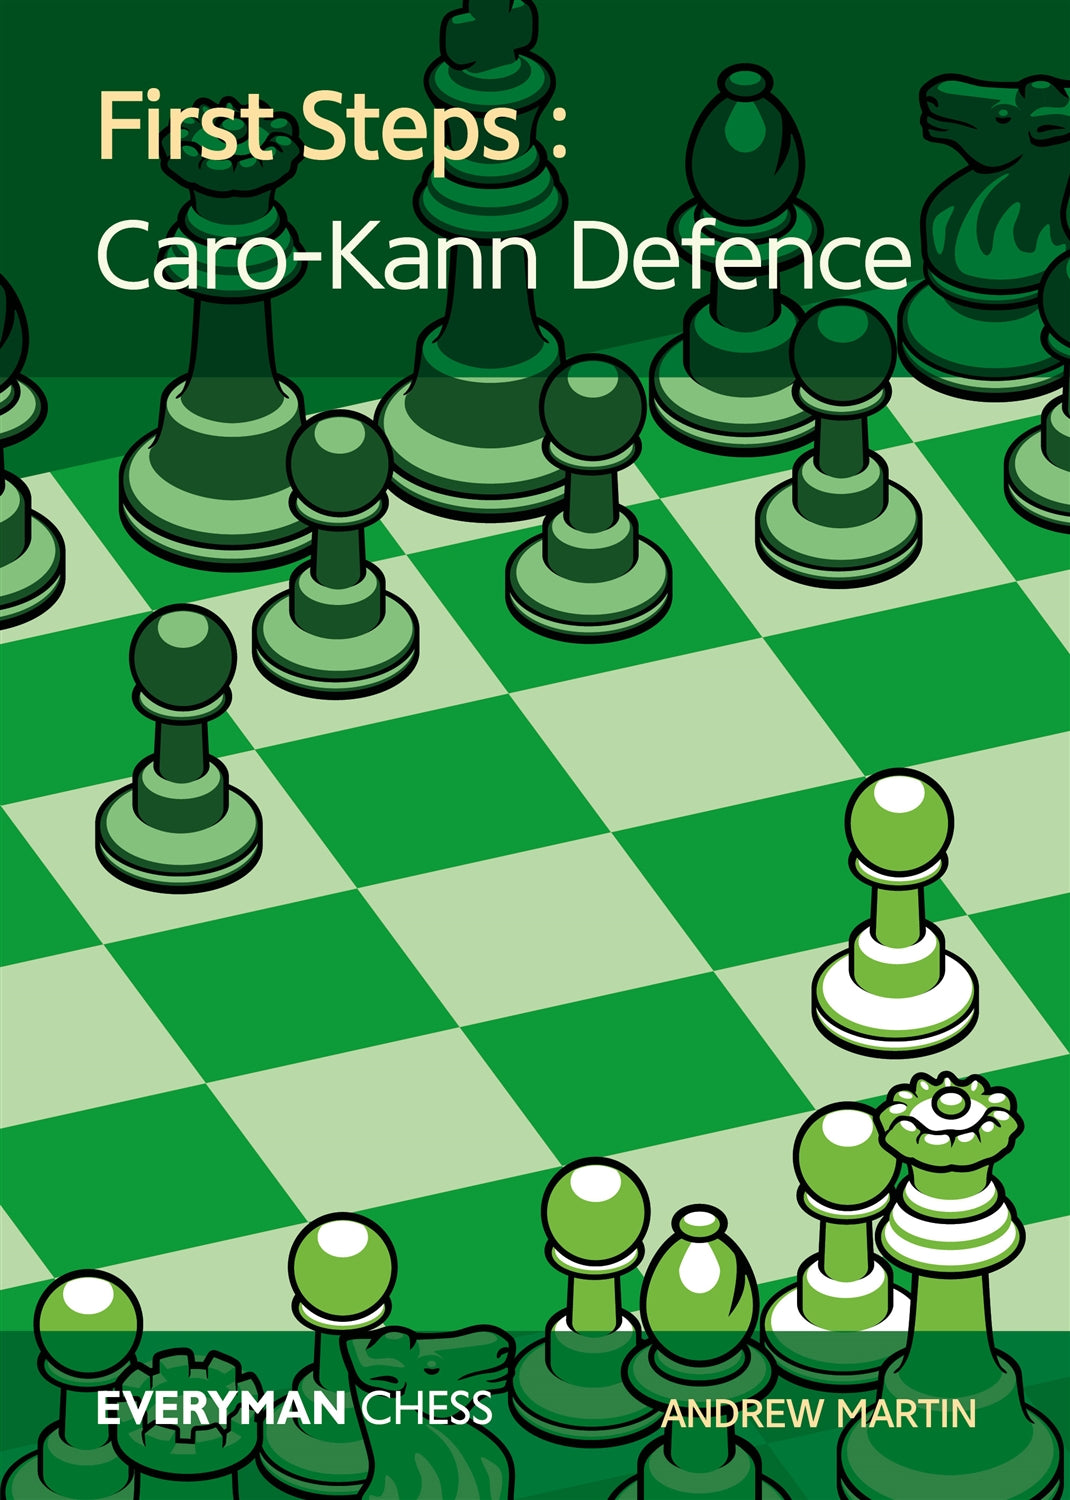 Caro-Kann Defense Classical Variation